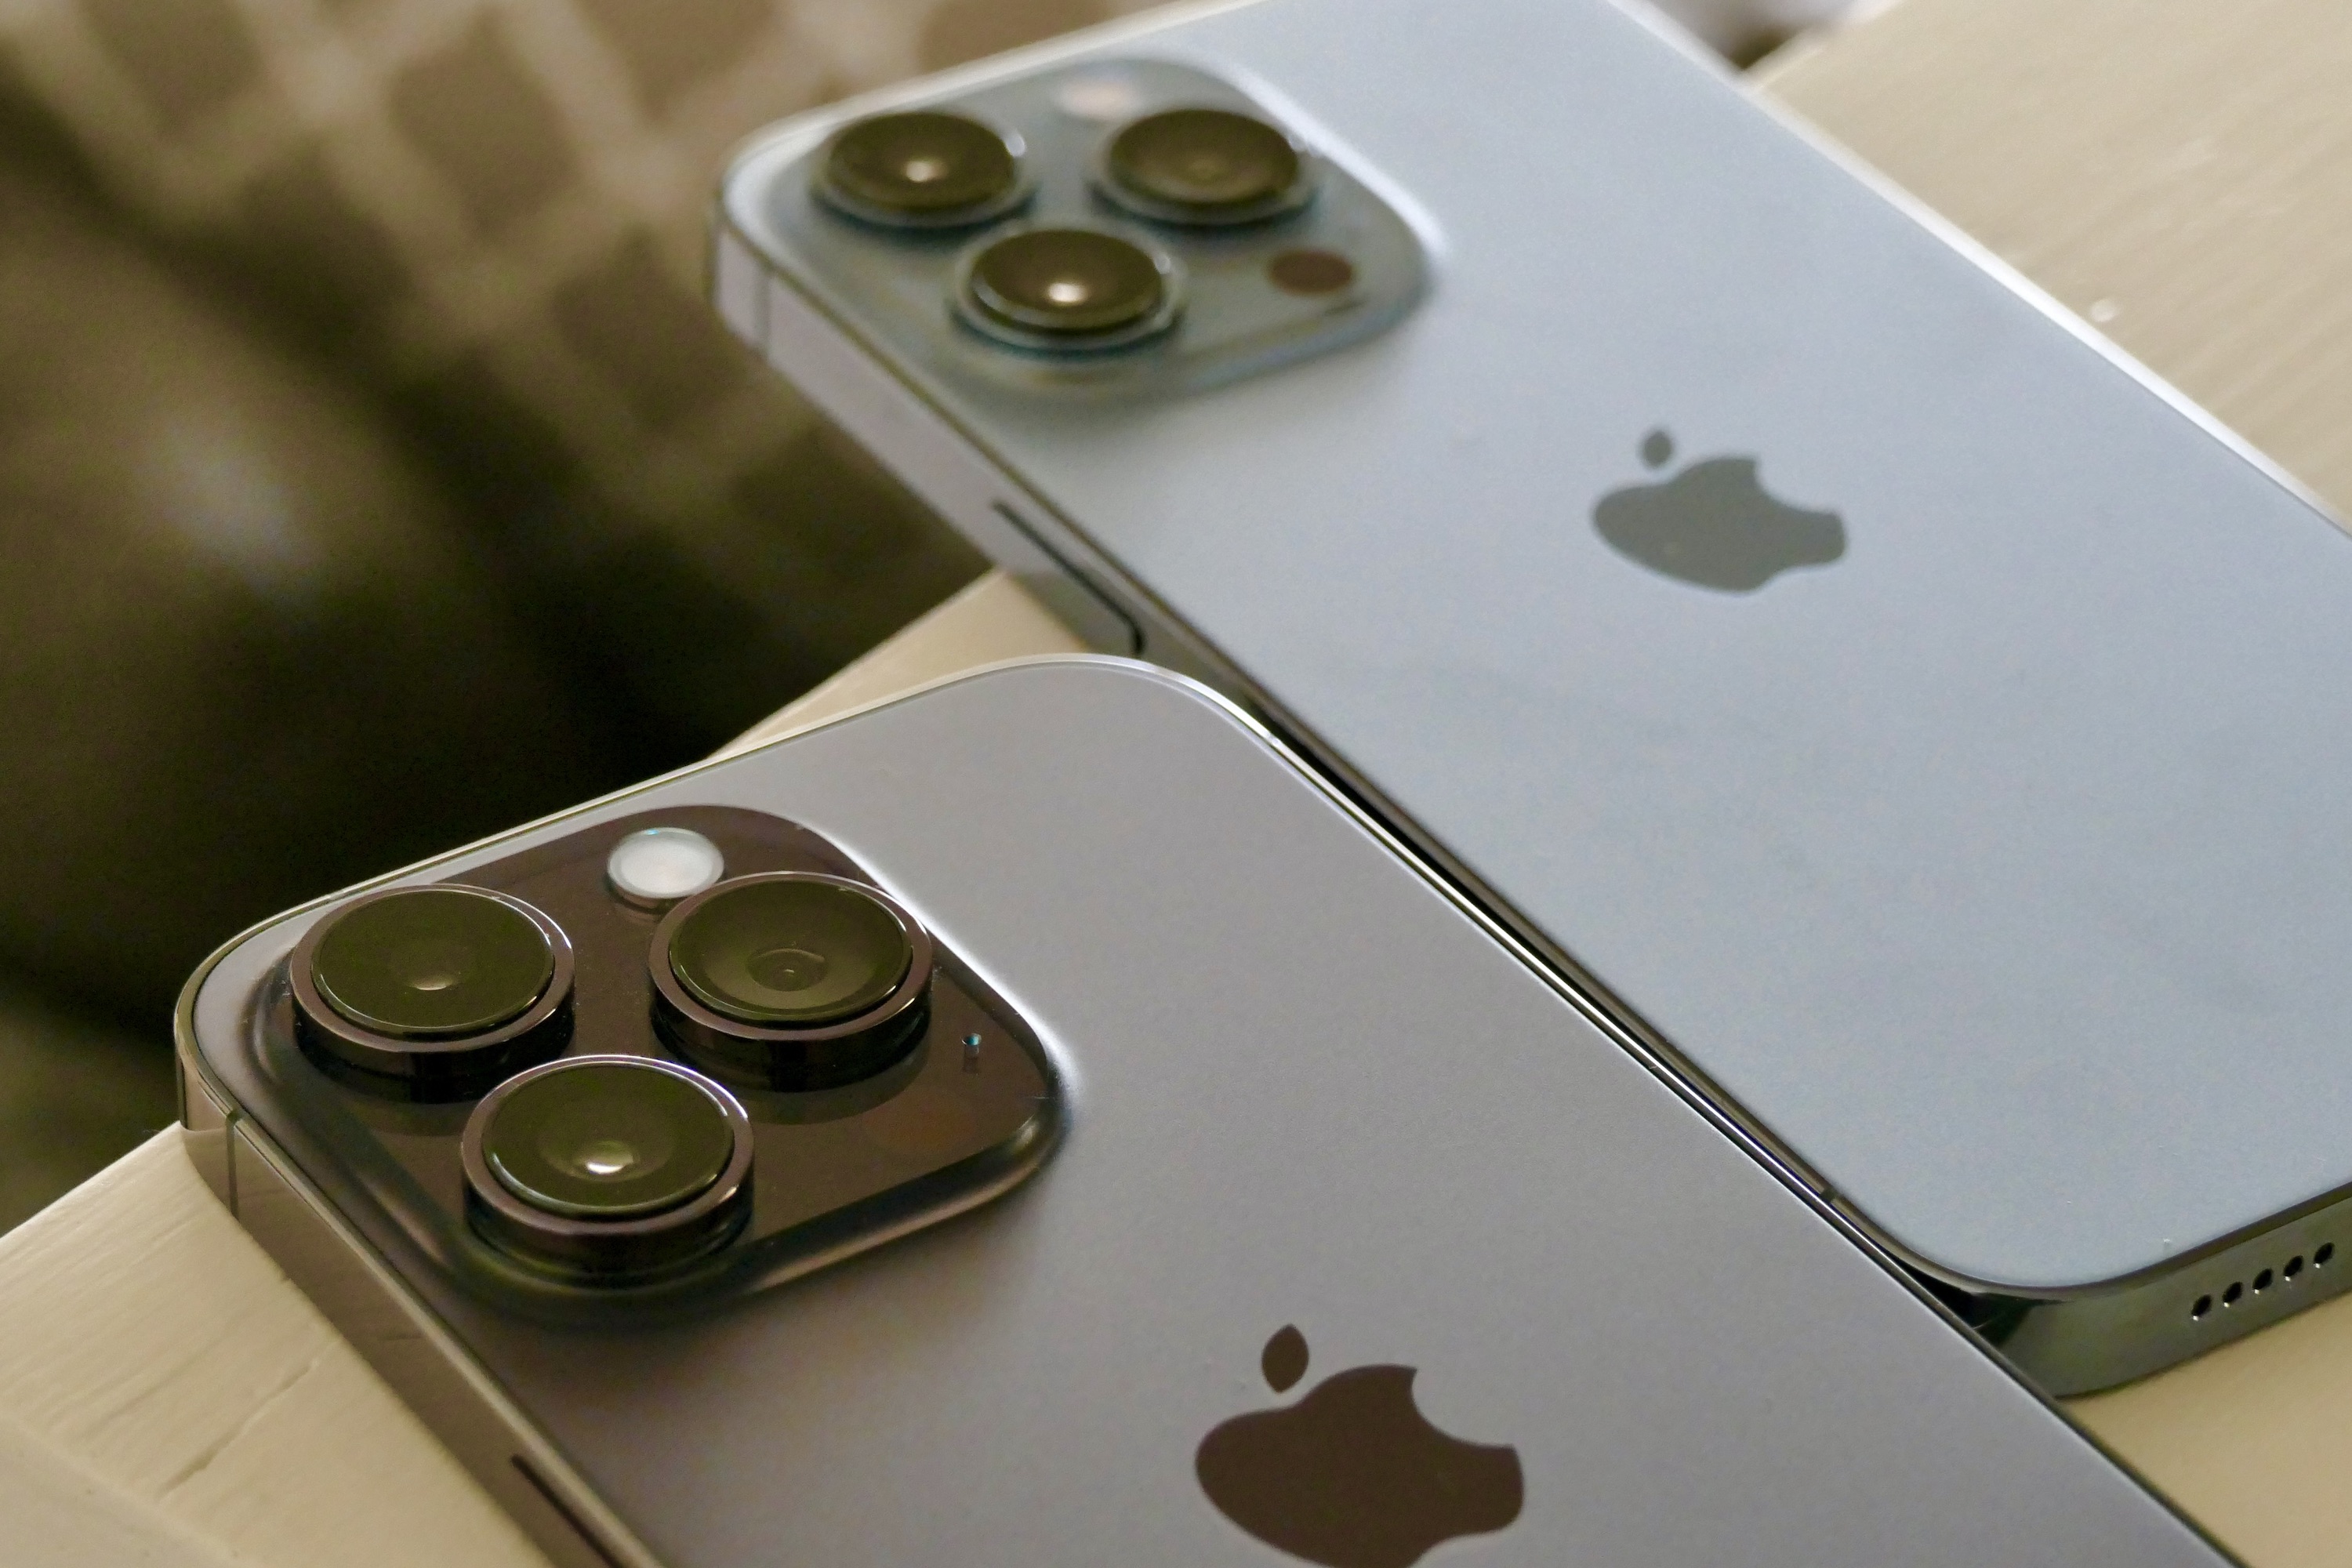 iPhone 14 Pro vs iPhone 13 Pro - Cameras compared - Amateur Photographer